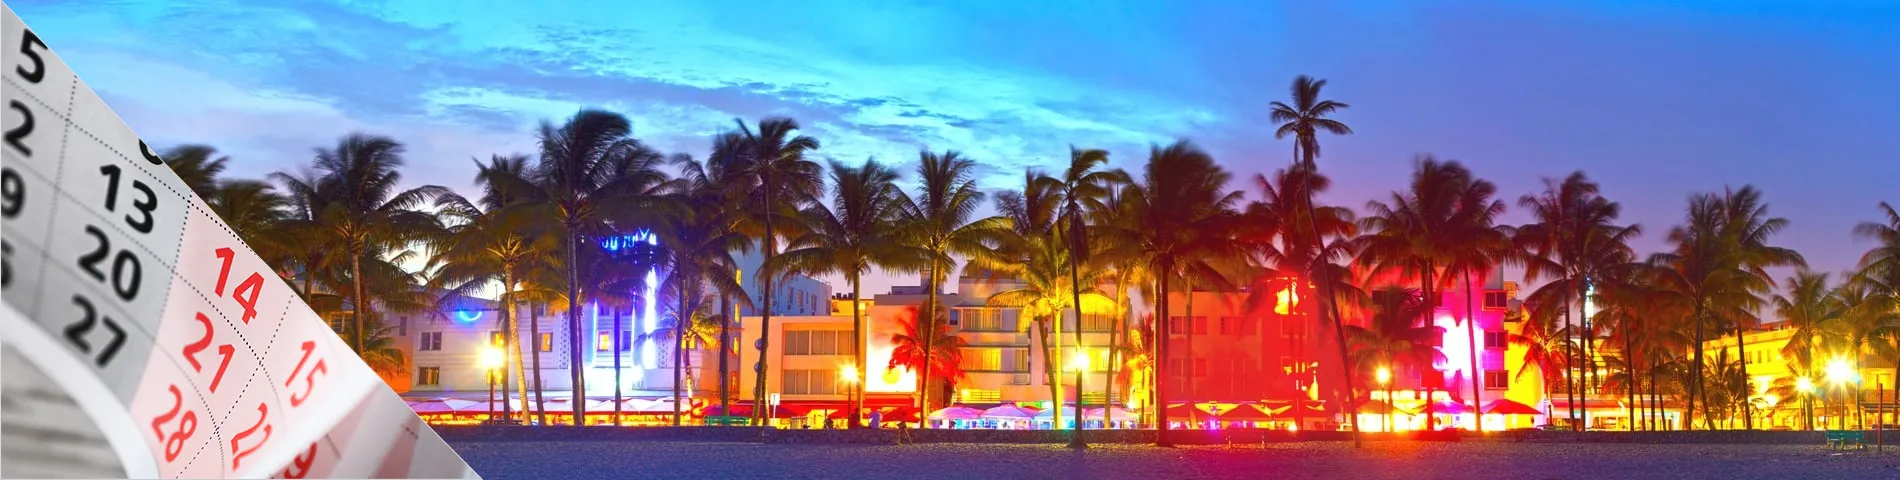 Miami - Weekend